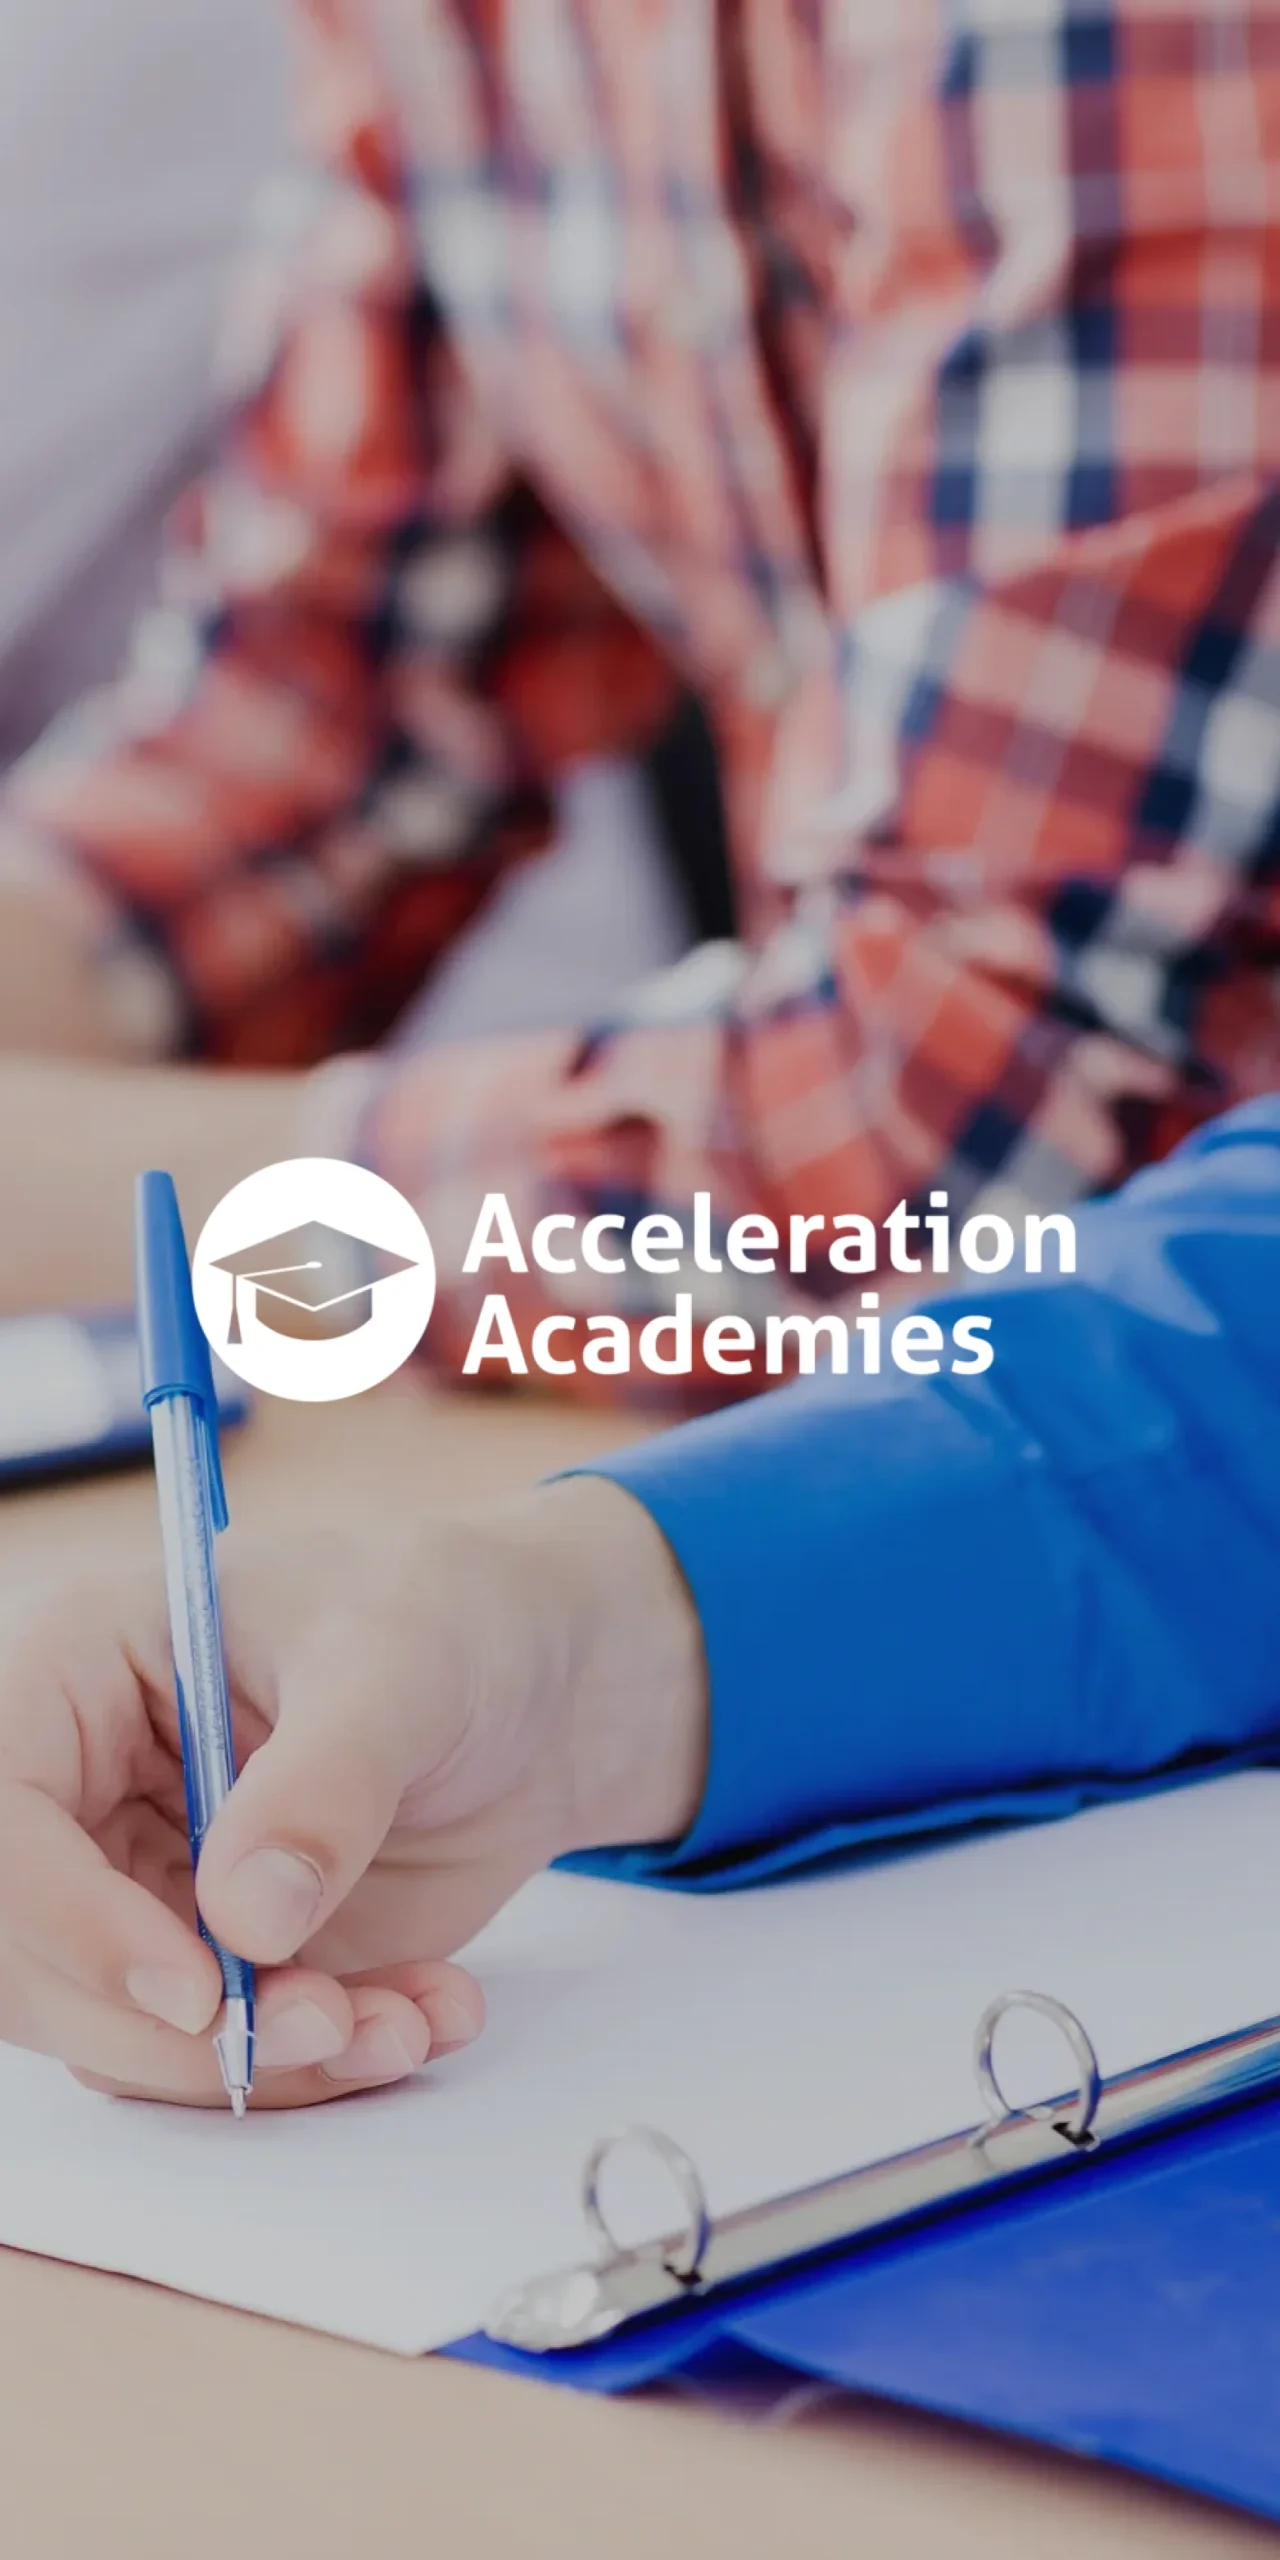 Accelleration Academies